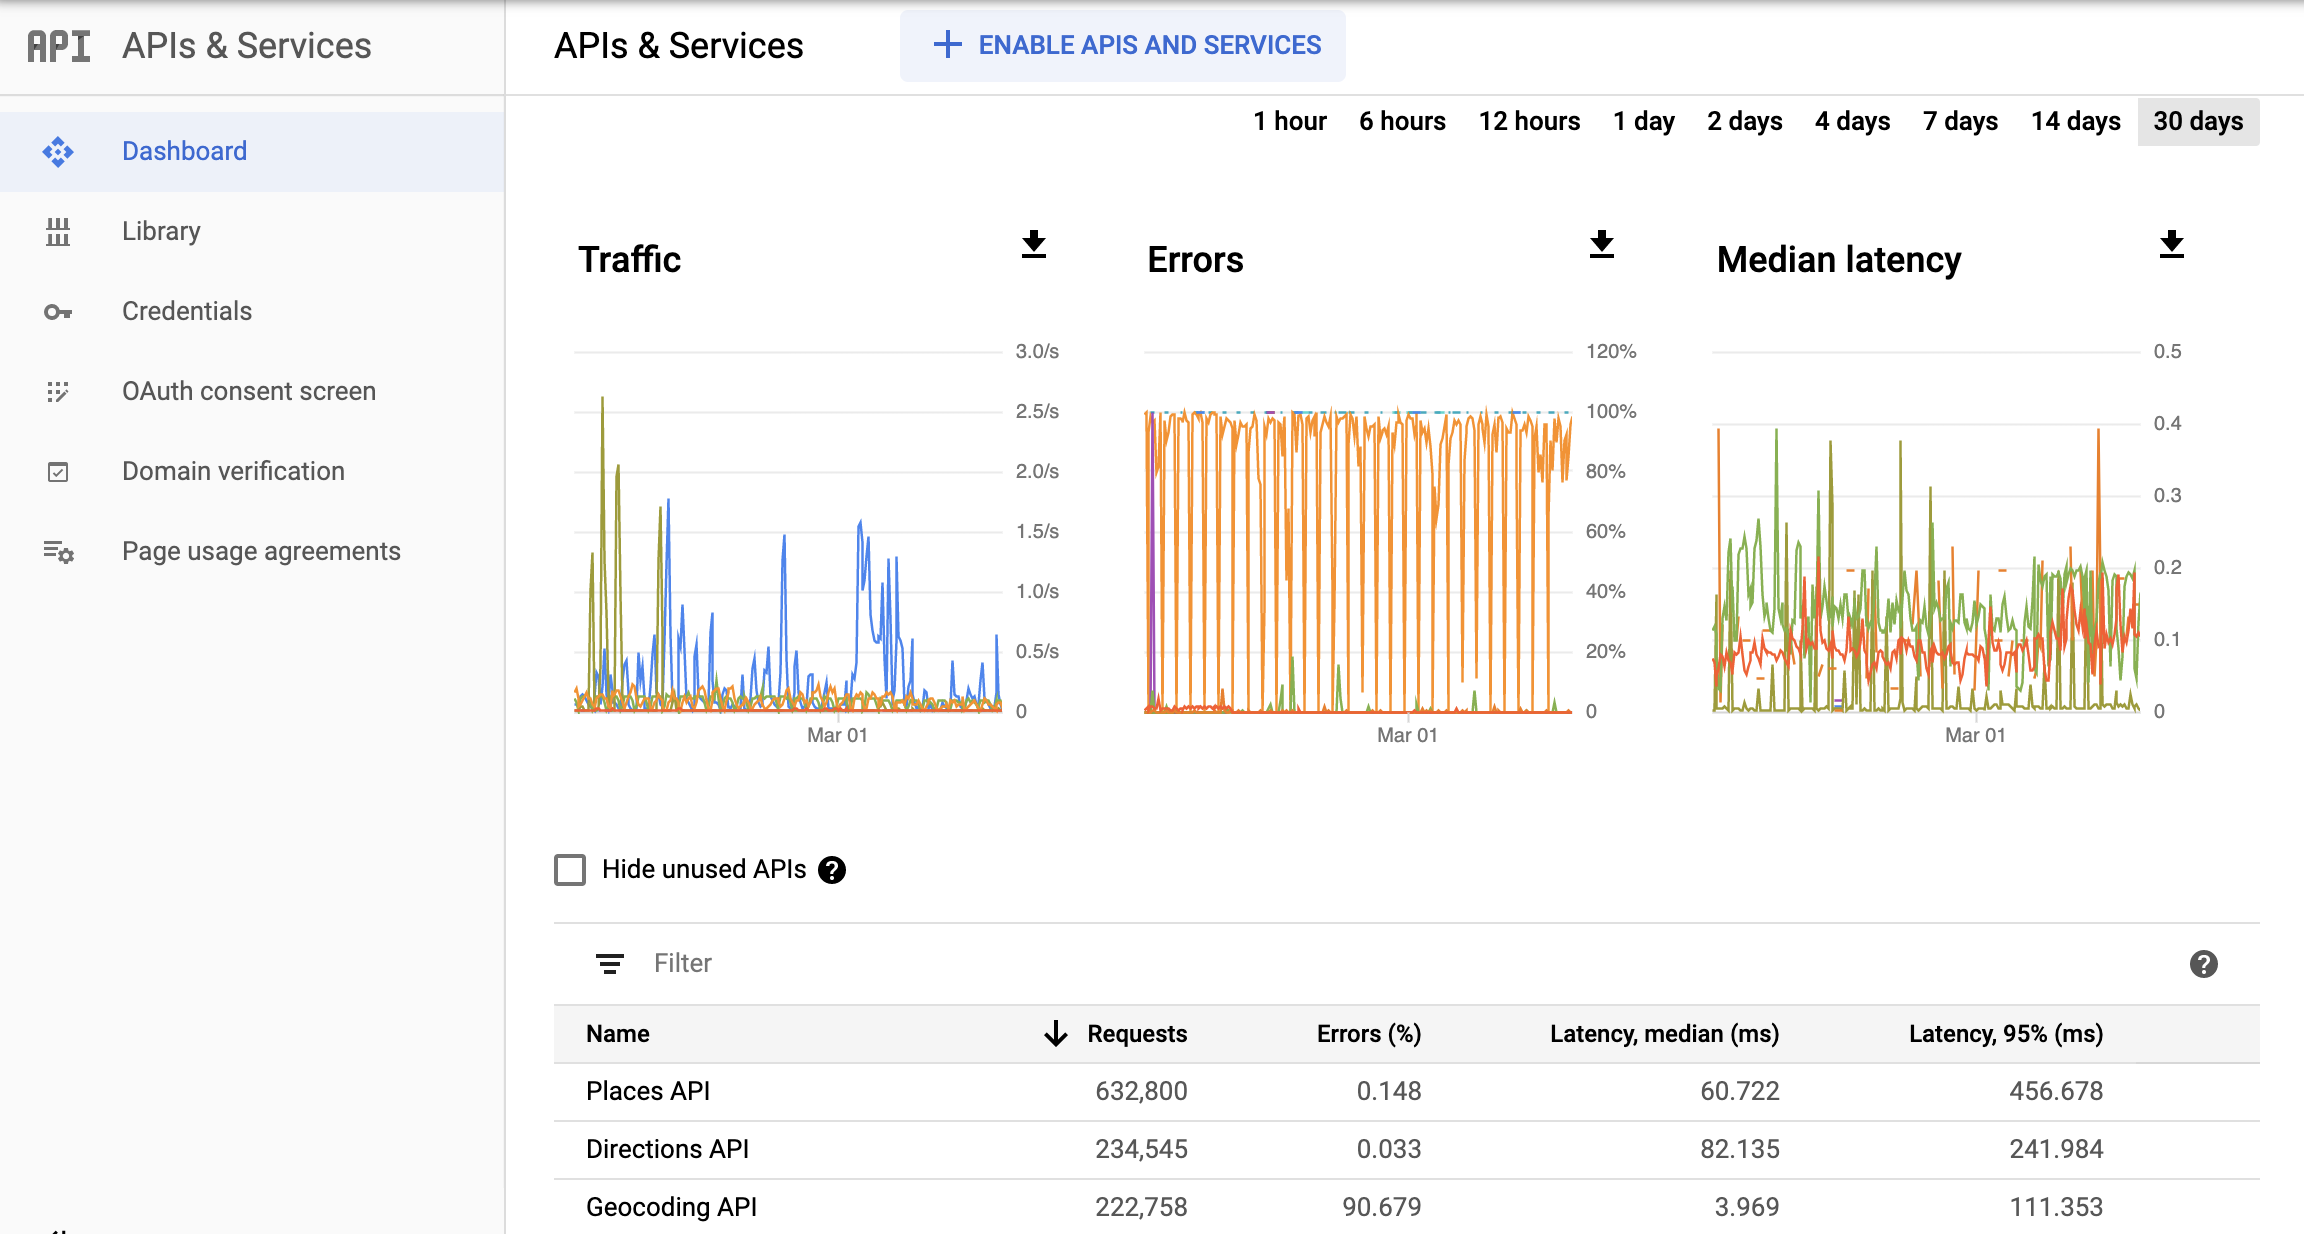 Google Cloud 控制台中 Monitoring API 页面的屏幕截图，显示了“API 和服务”报告信息中心。其中分别显示了“流量”“错误”和“延迟时间中位数”图表。这些图表可显示 1 小时到 30 天的数据。